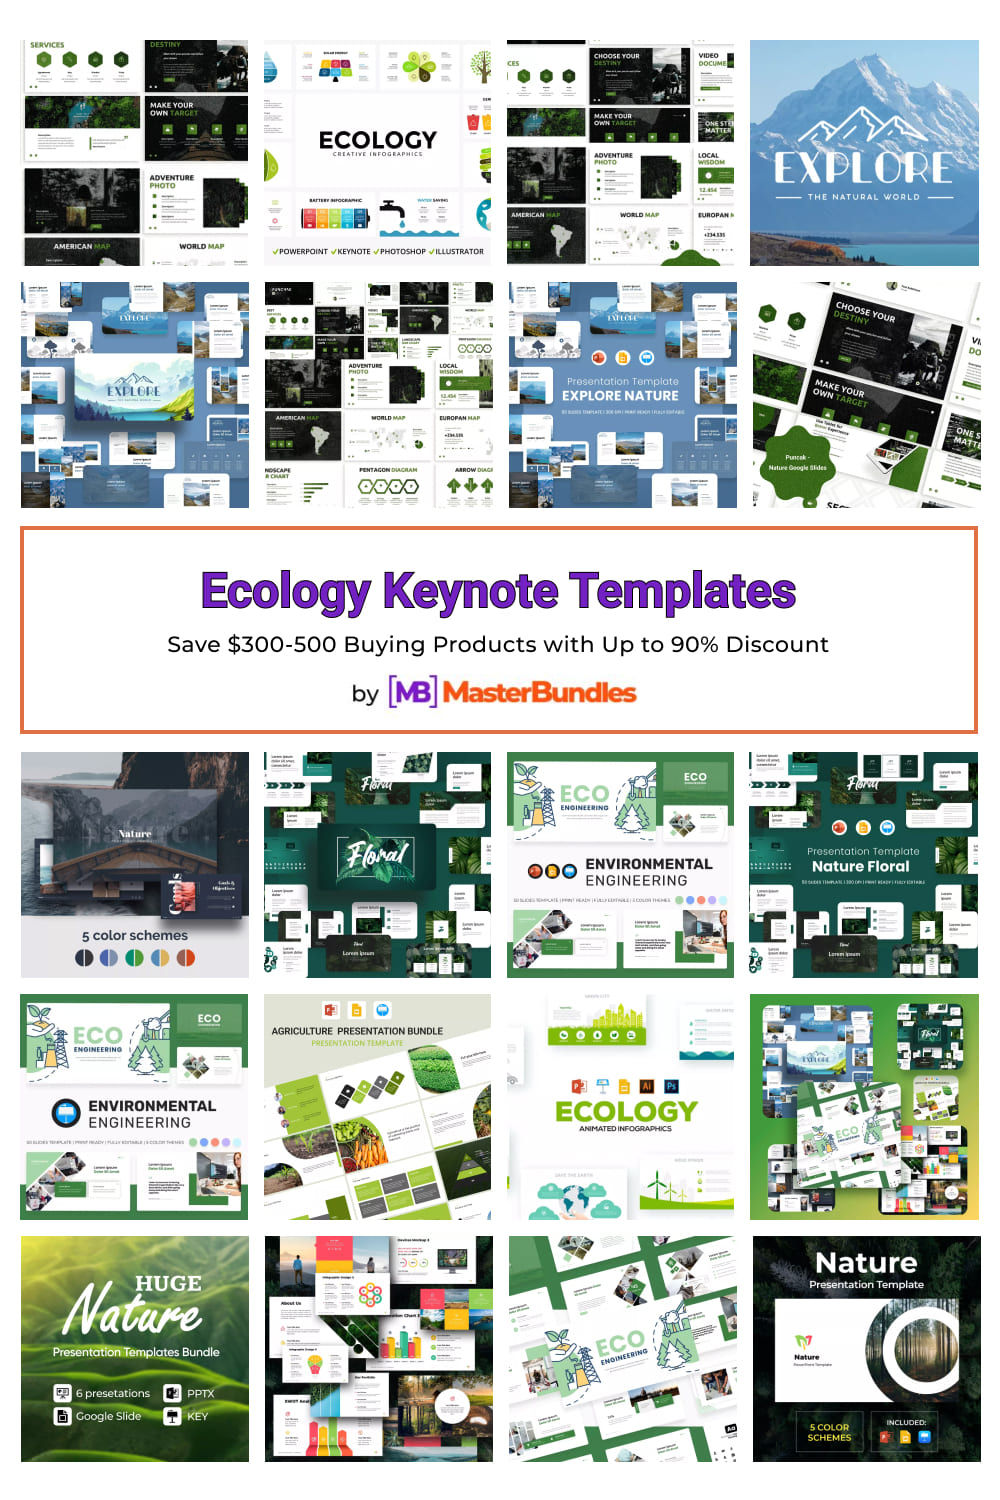 Ecology Keynote Templates Pinterest image.